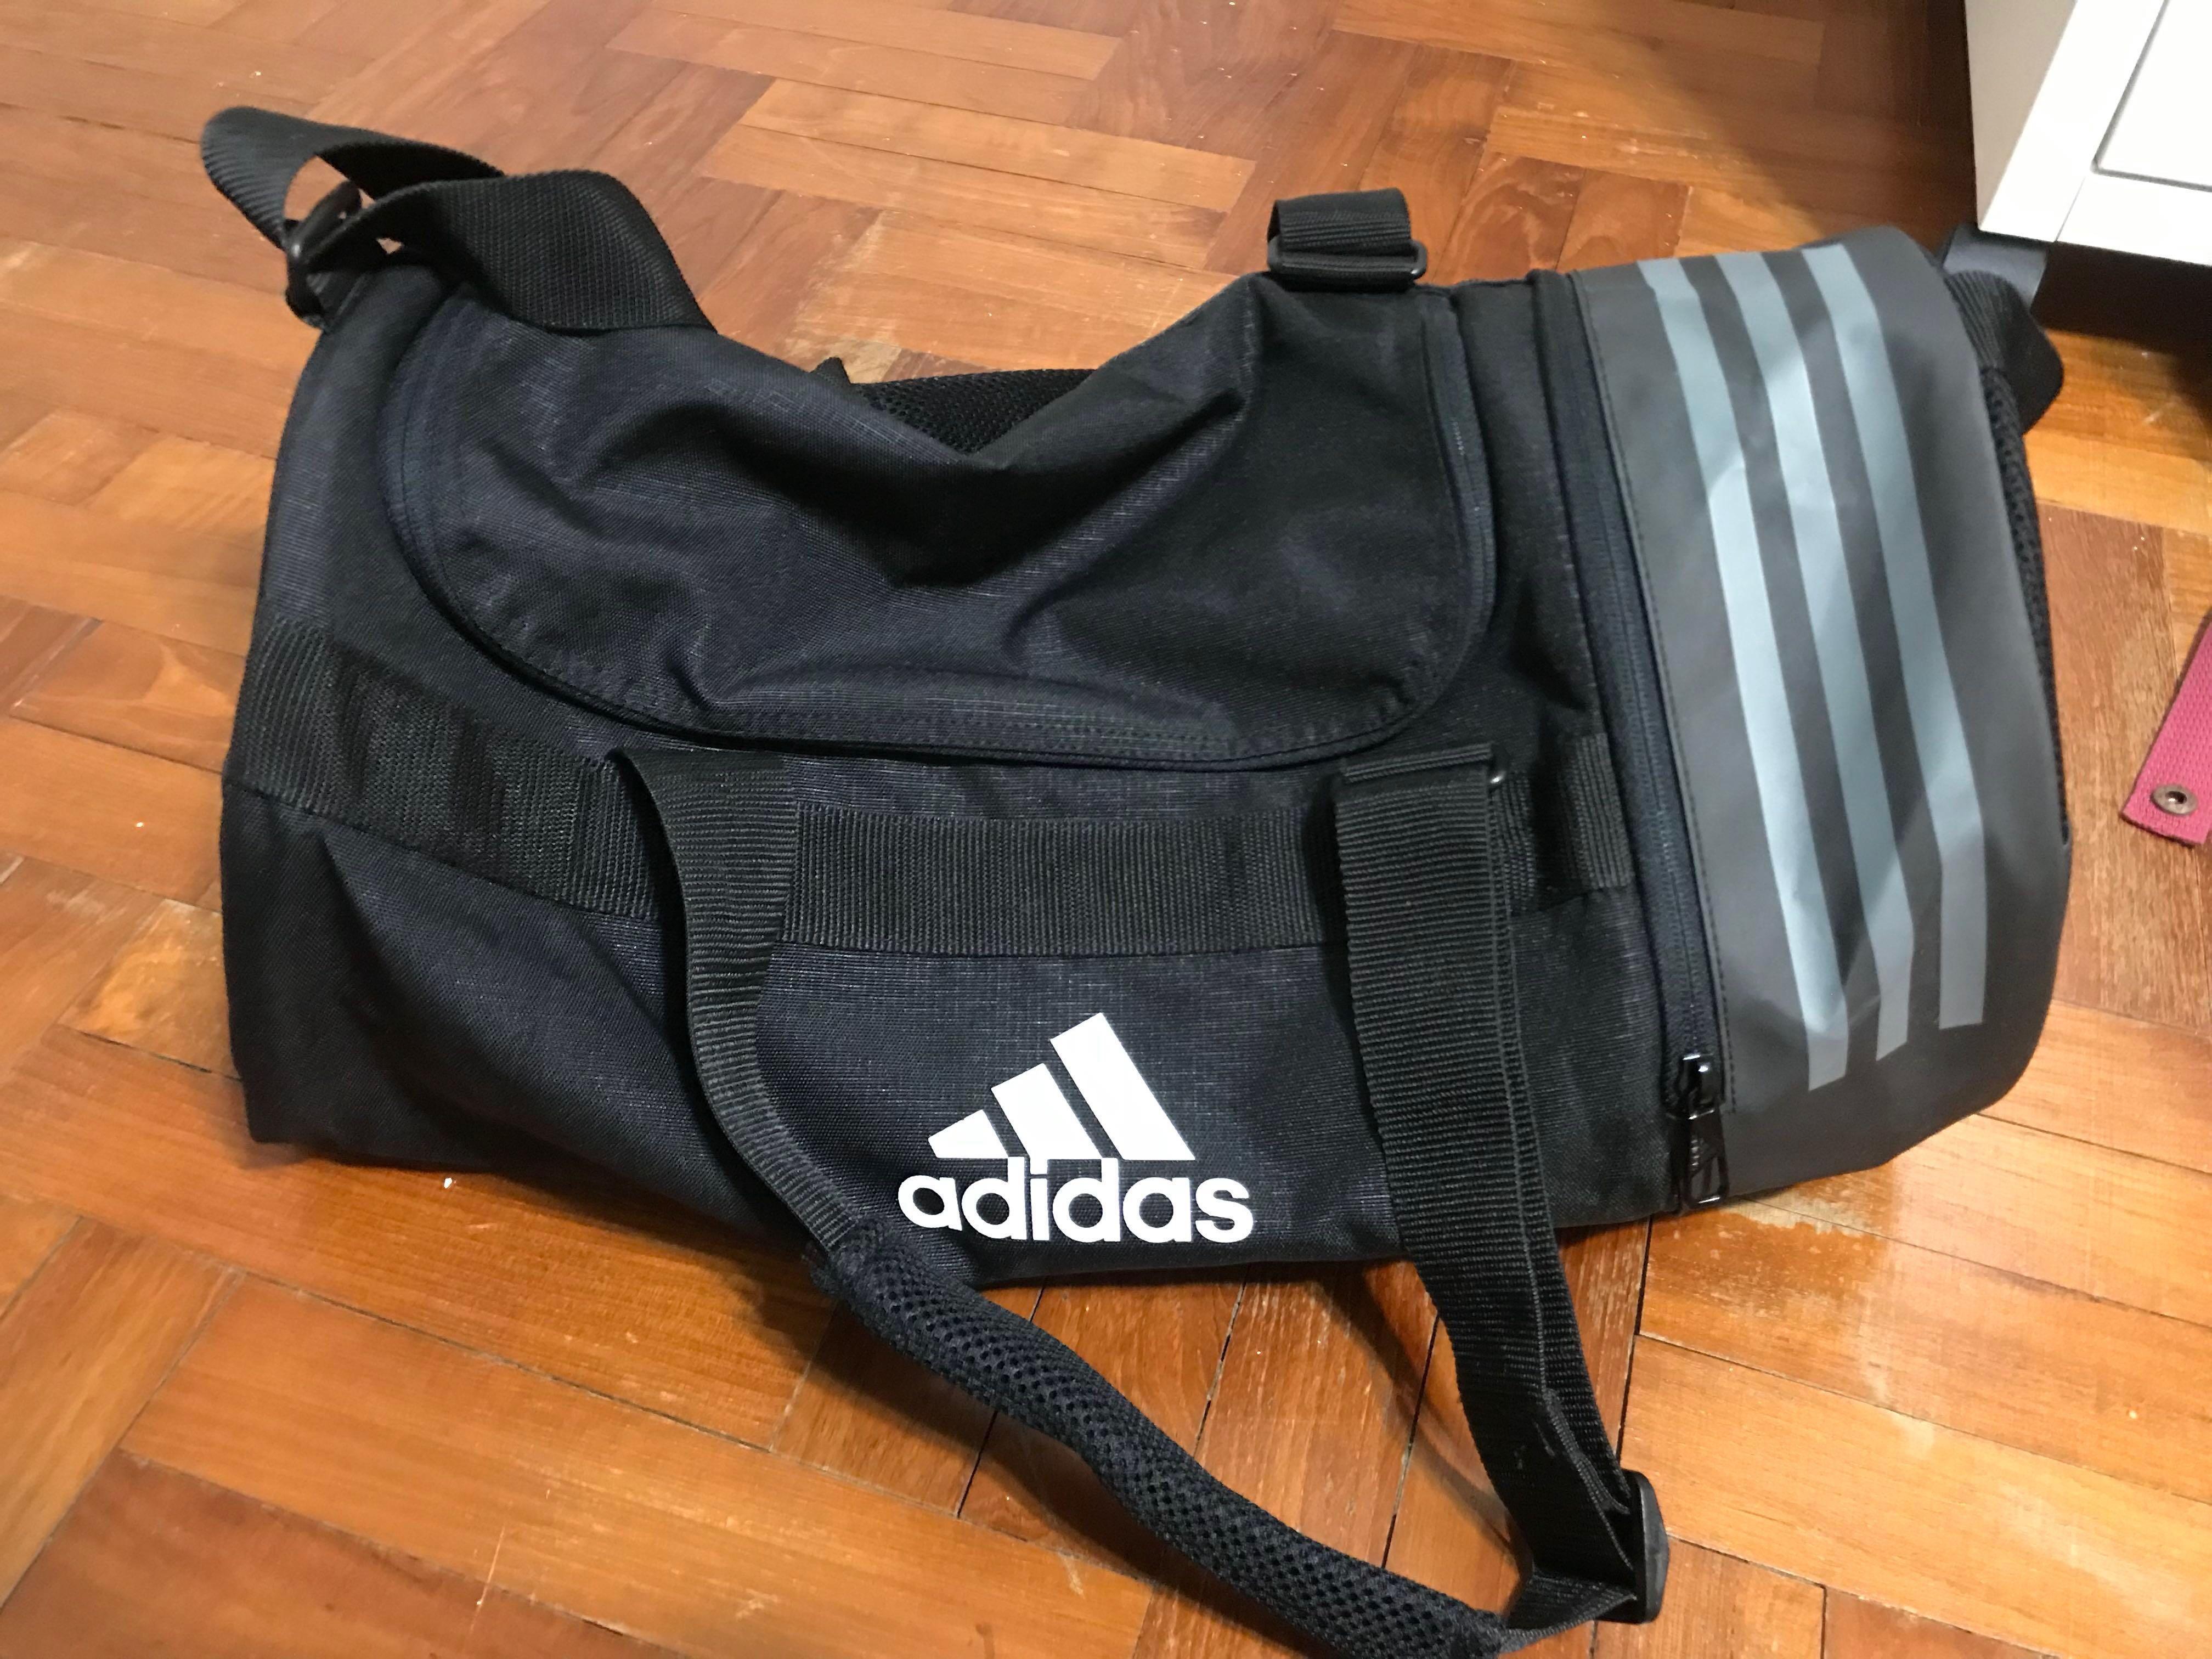 Adidas Convertible 3 Stripes Duffel Bag 